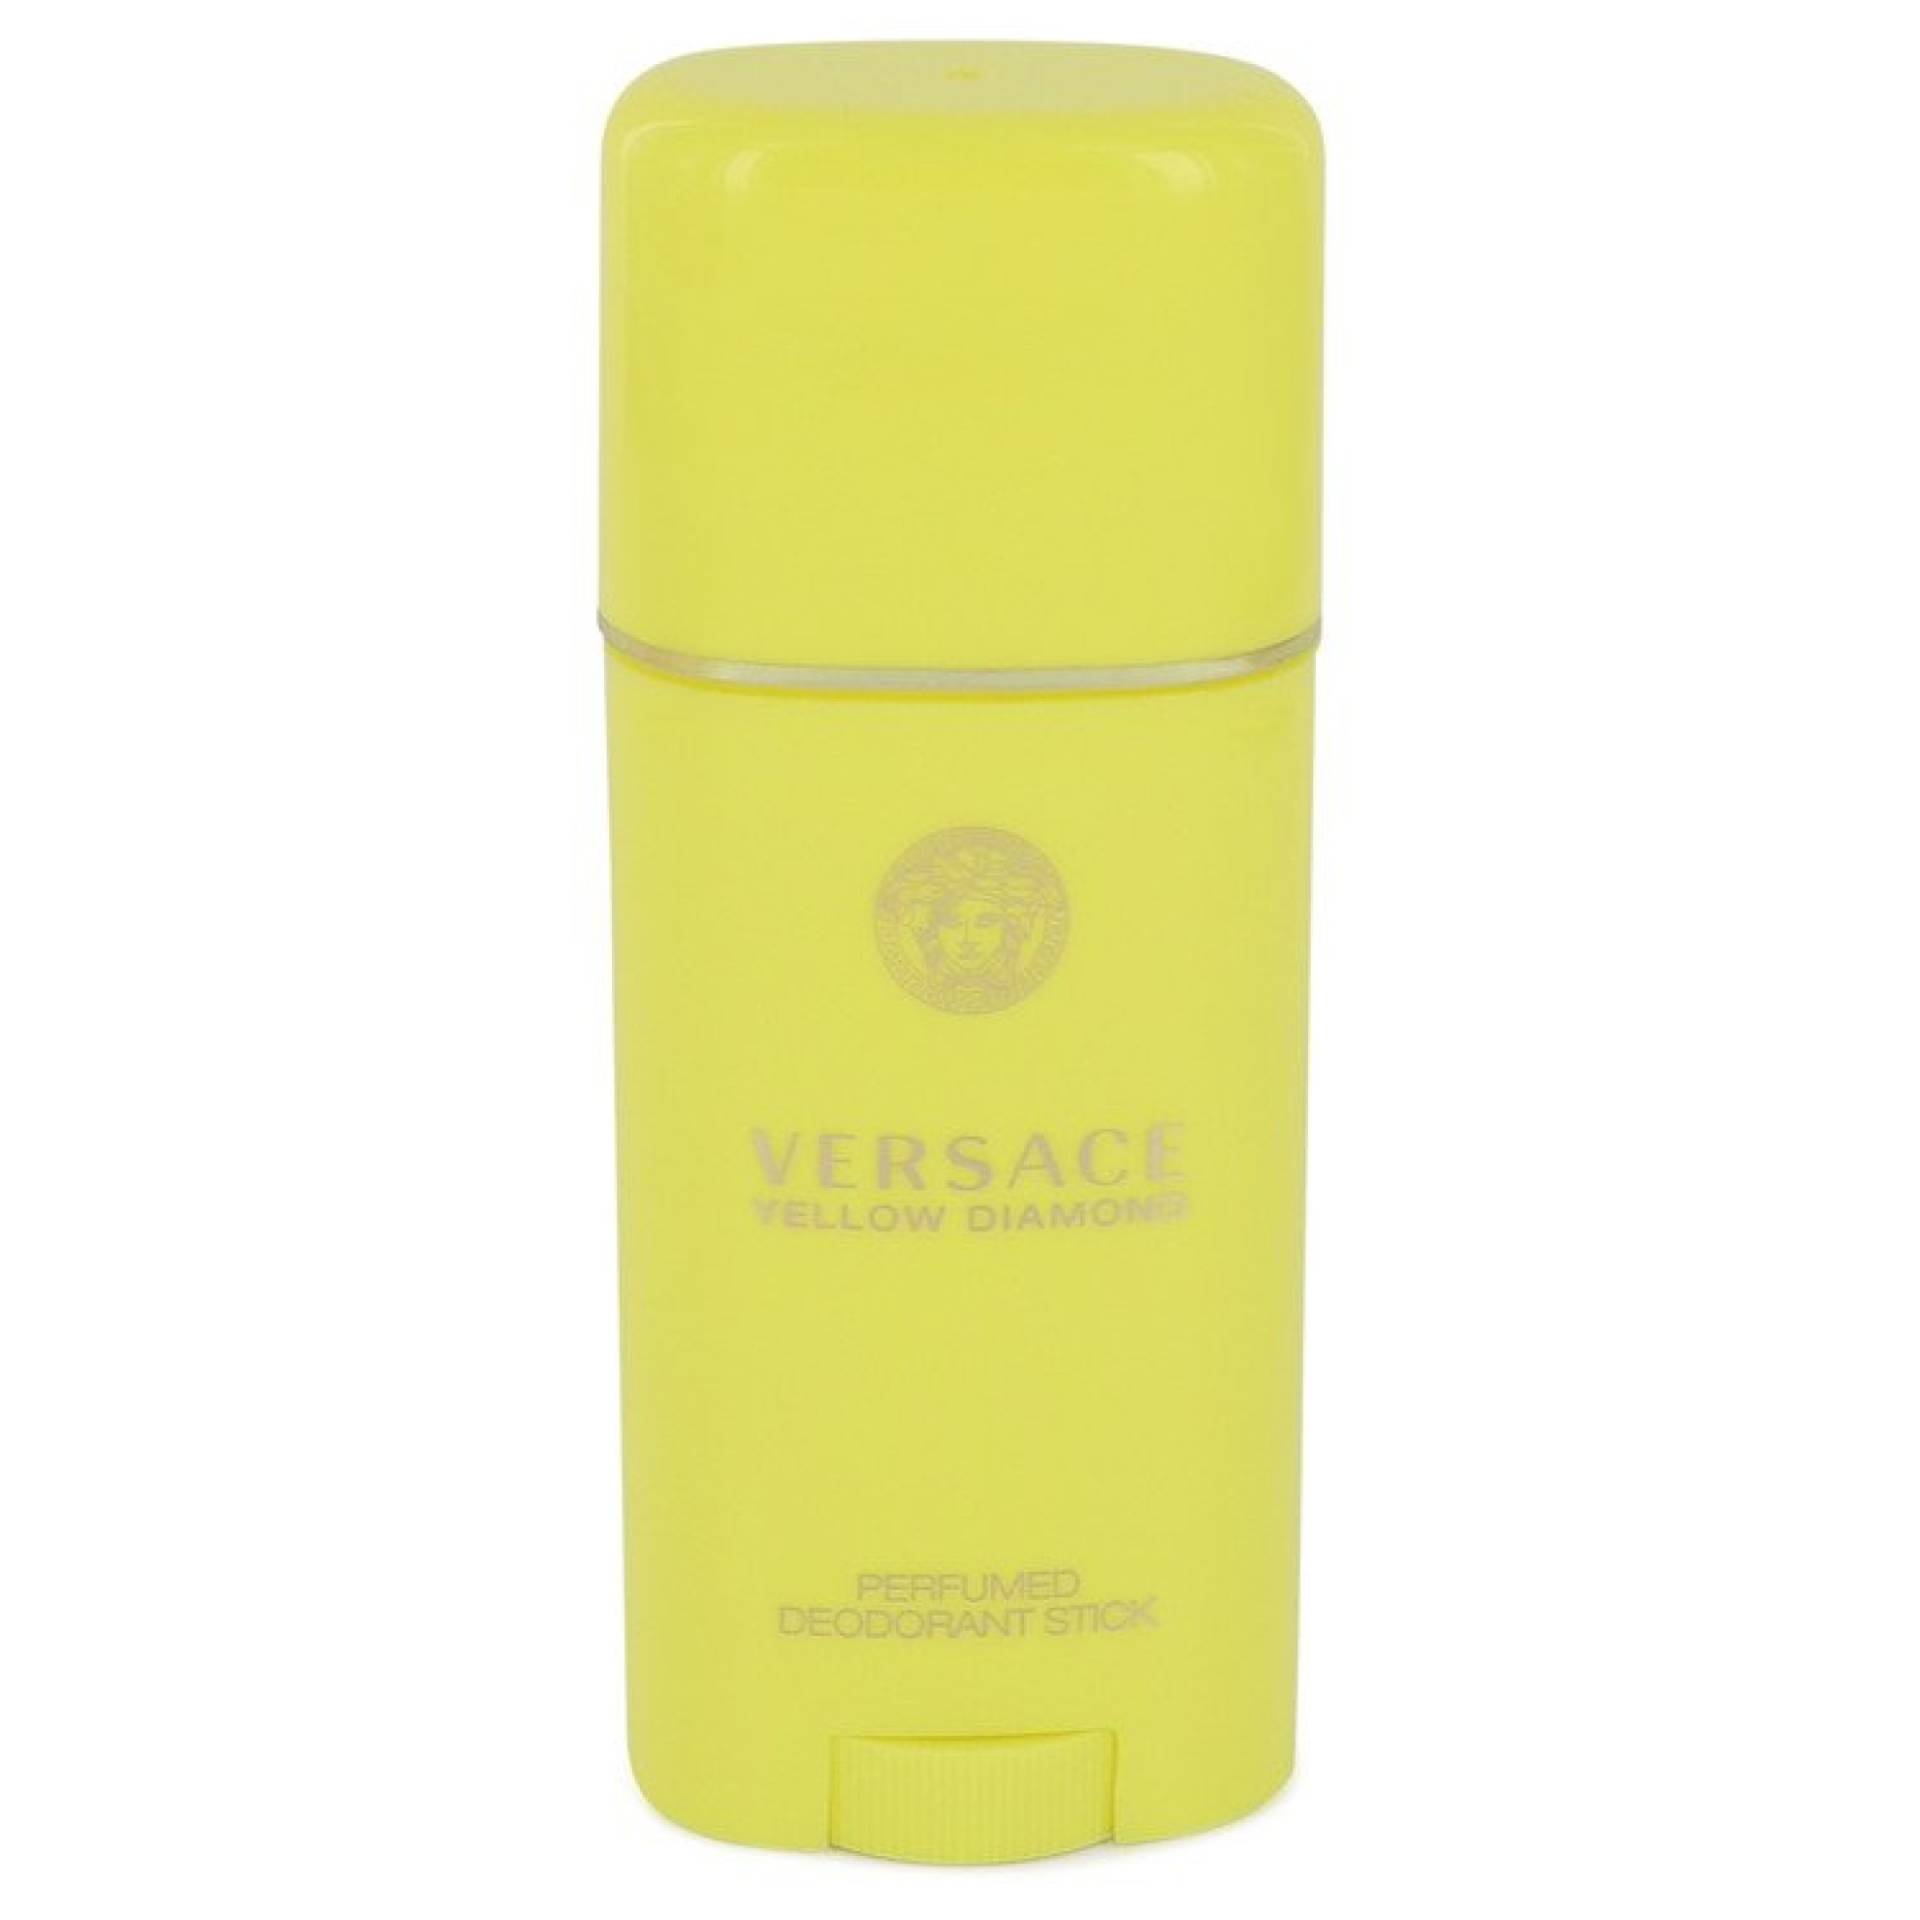 Versace Yellow Diamond Deodorant Stick 50 ml von Versace